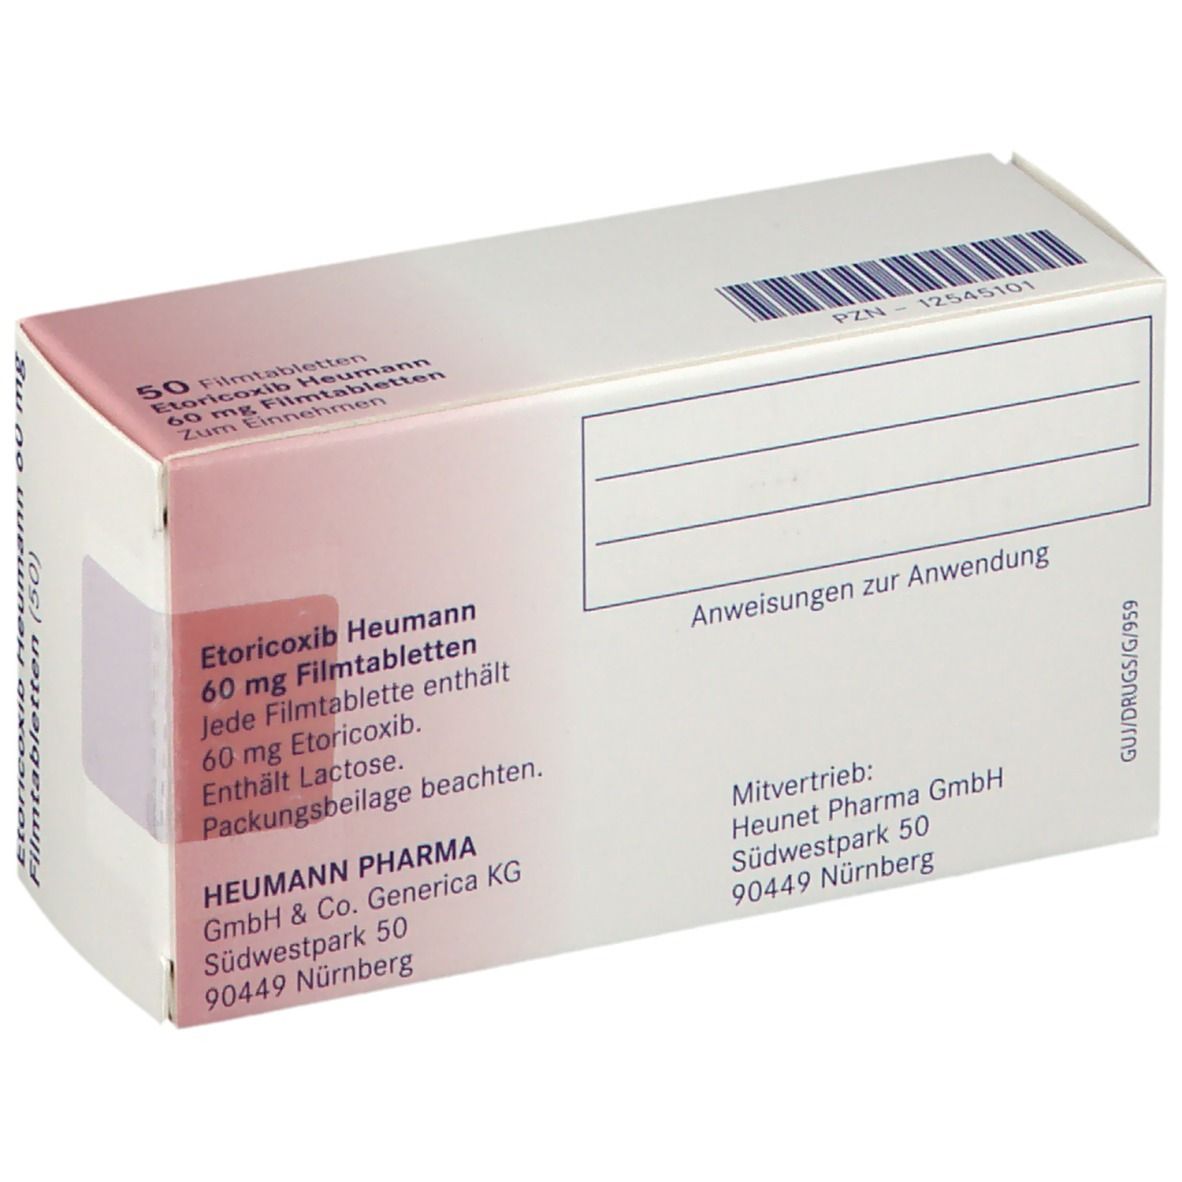 Etoricoxib Heumann 60 mg